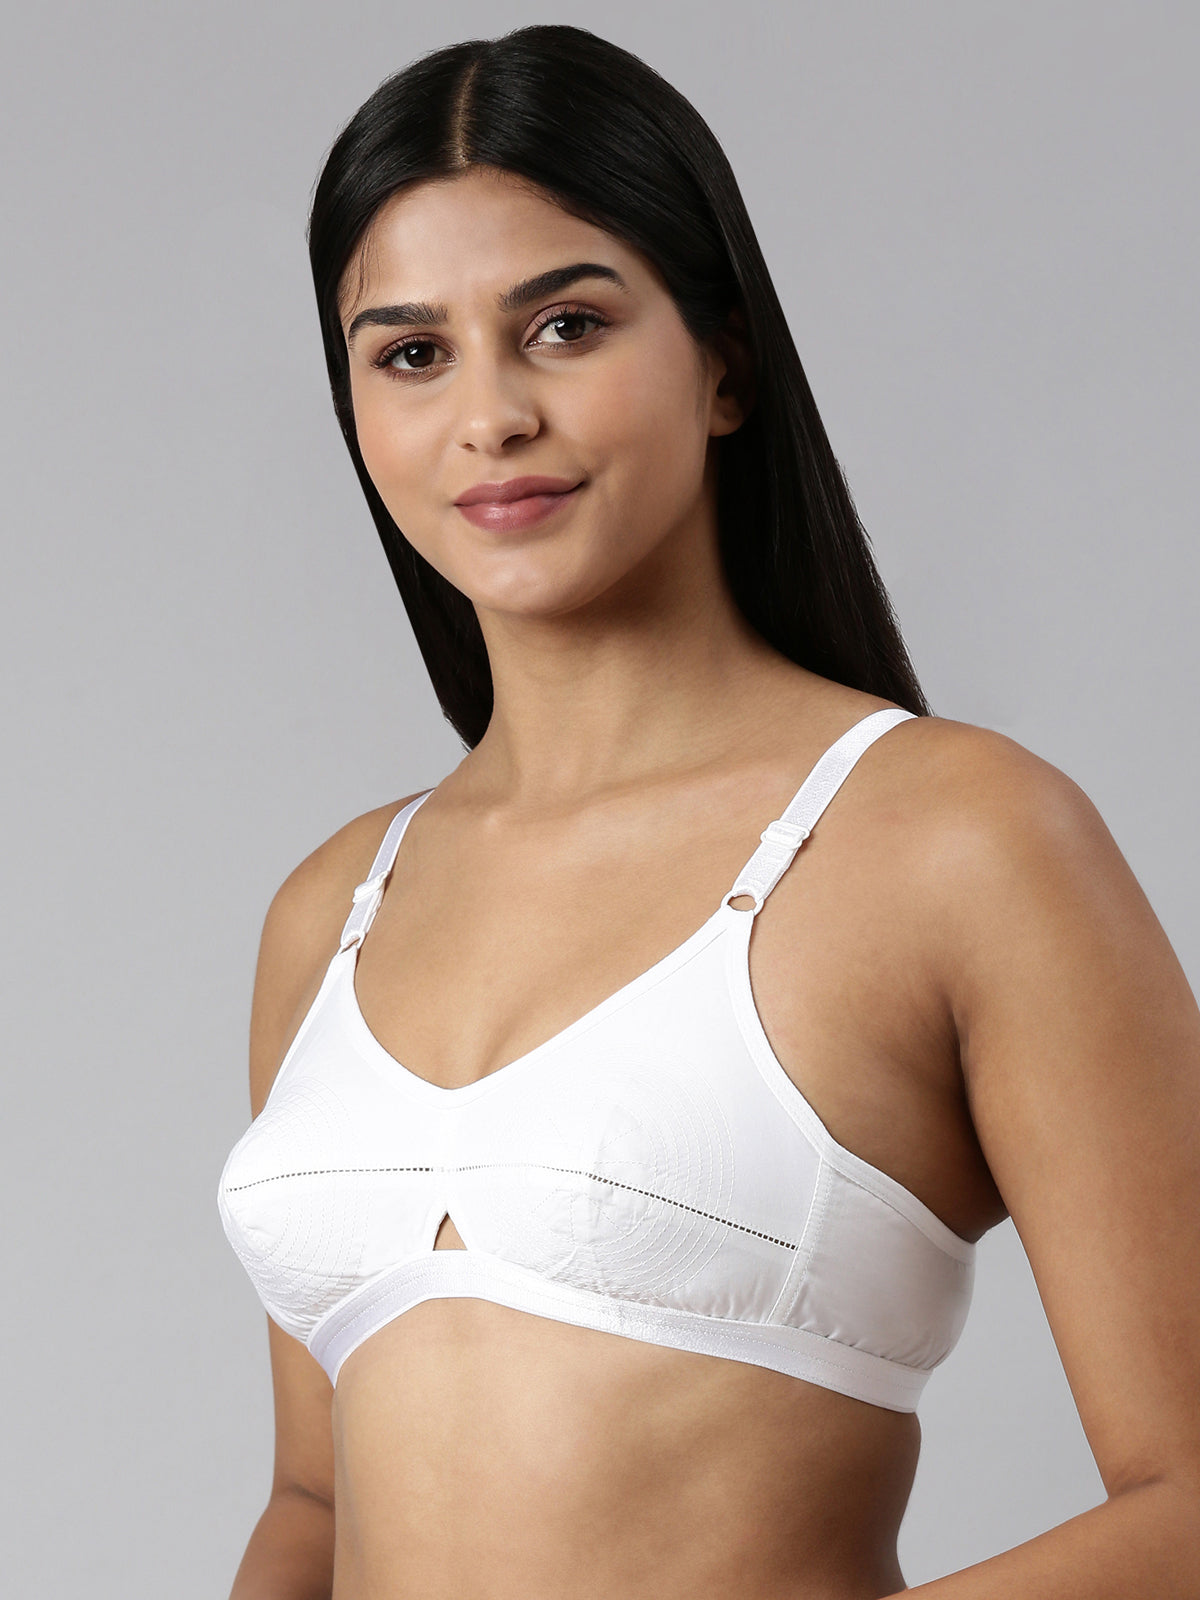 blossom-favorite bra-white2-woven cotton-everyday bra